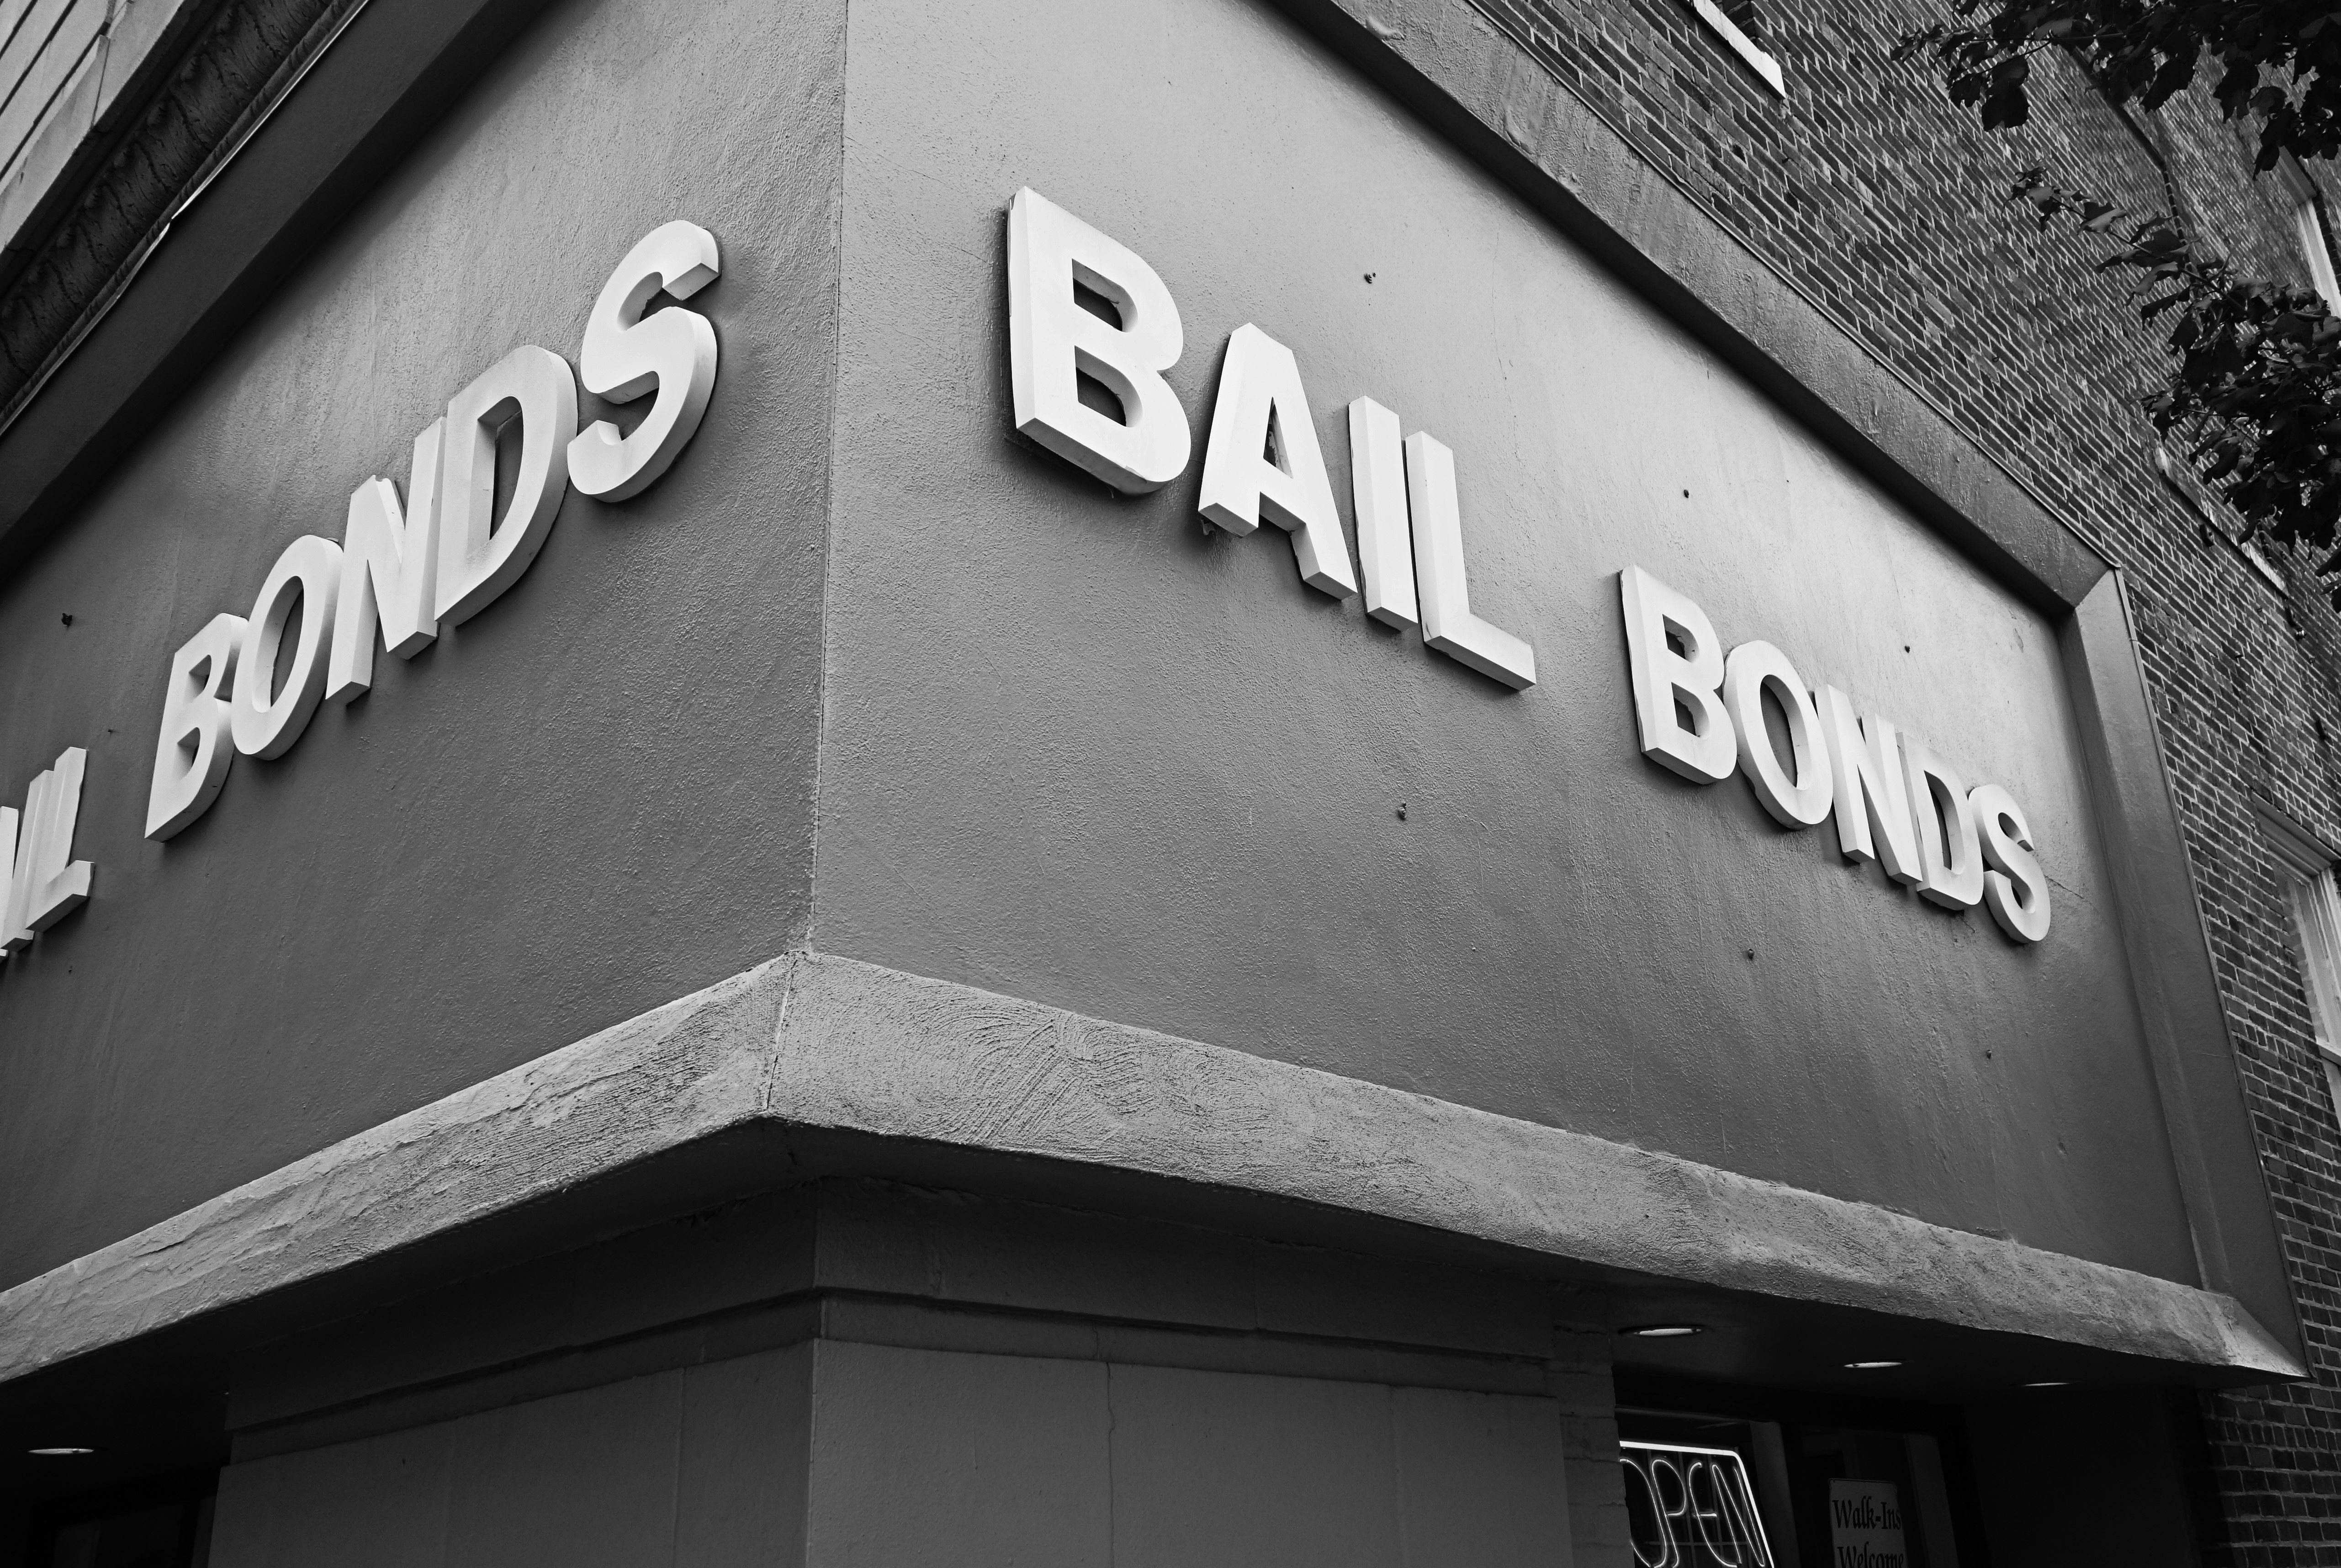 Bail Bond Houston